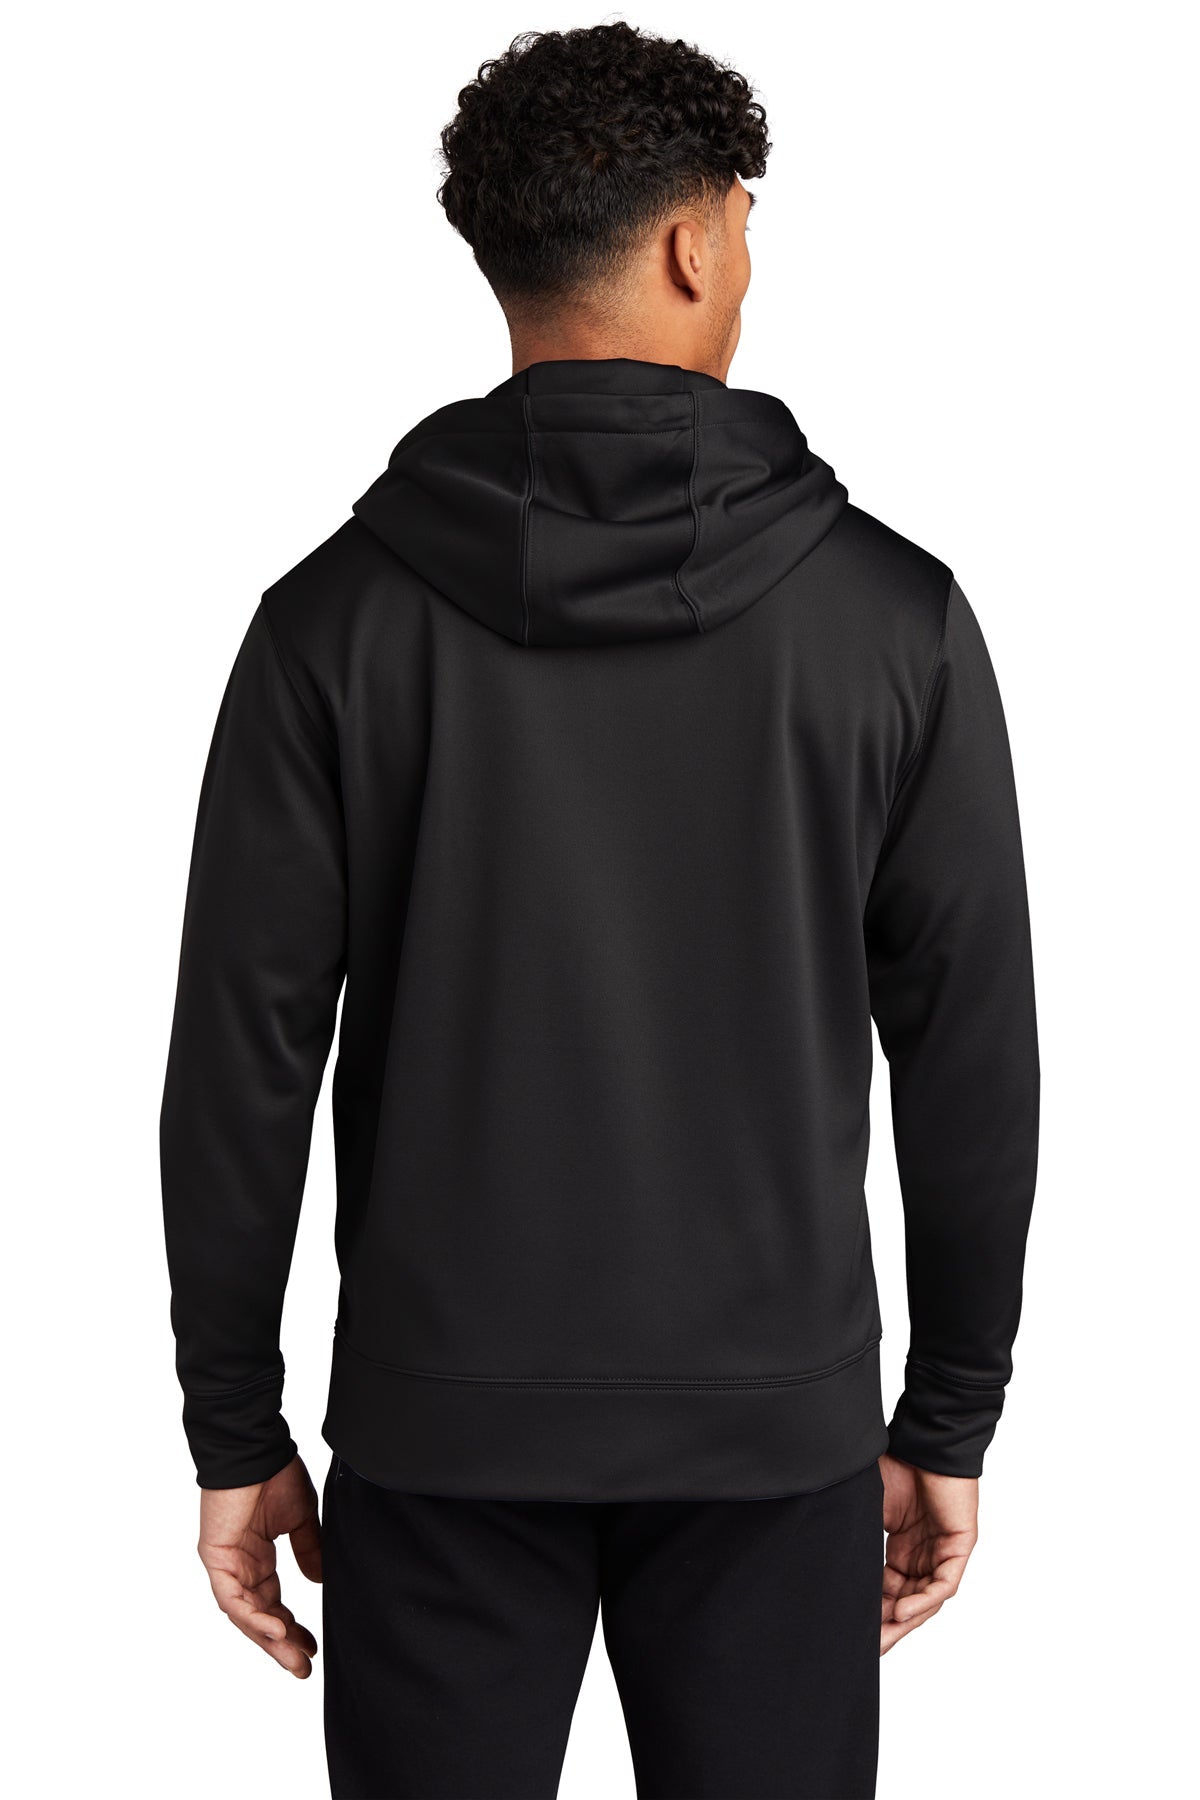 sport-tek_st238 _black_company_logo_sweatshirts